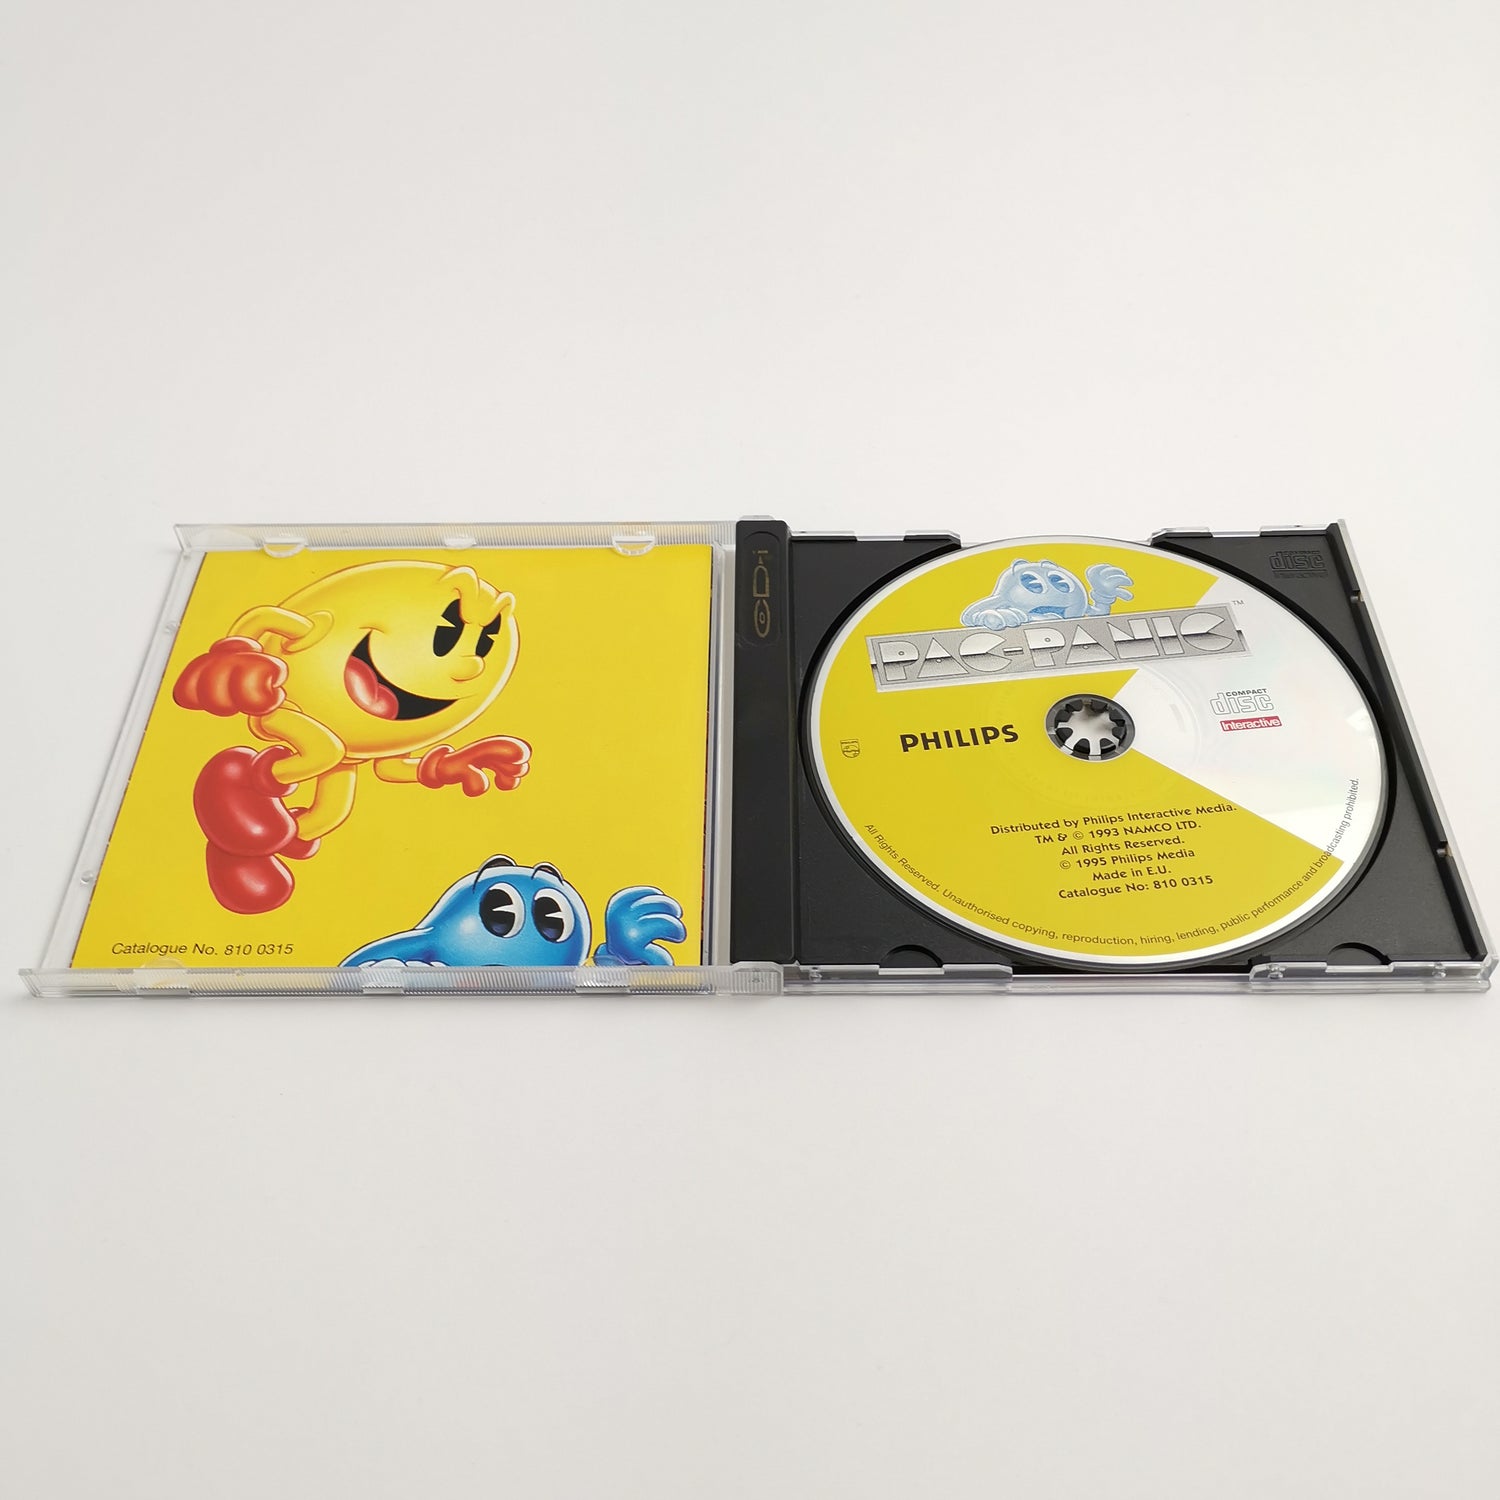 Philips CD-I game 